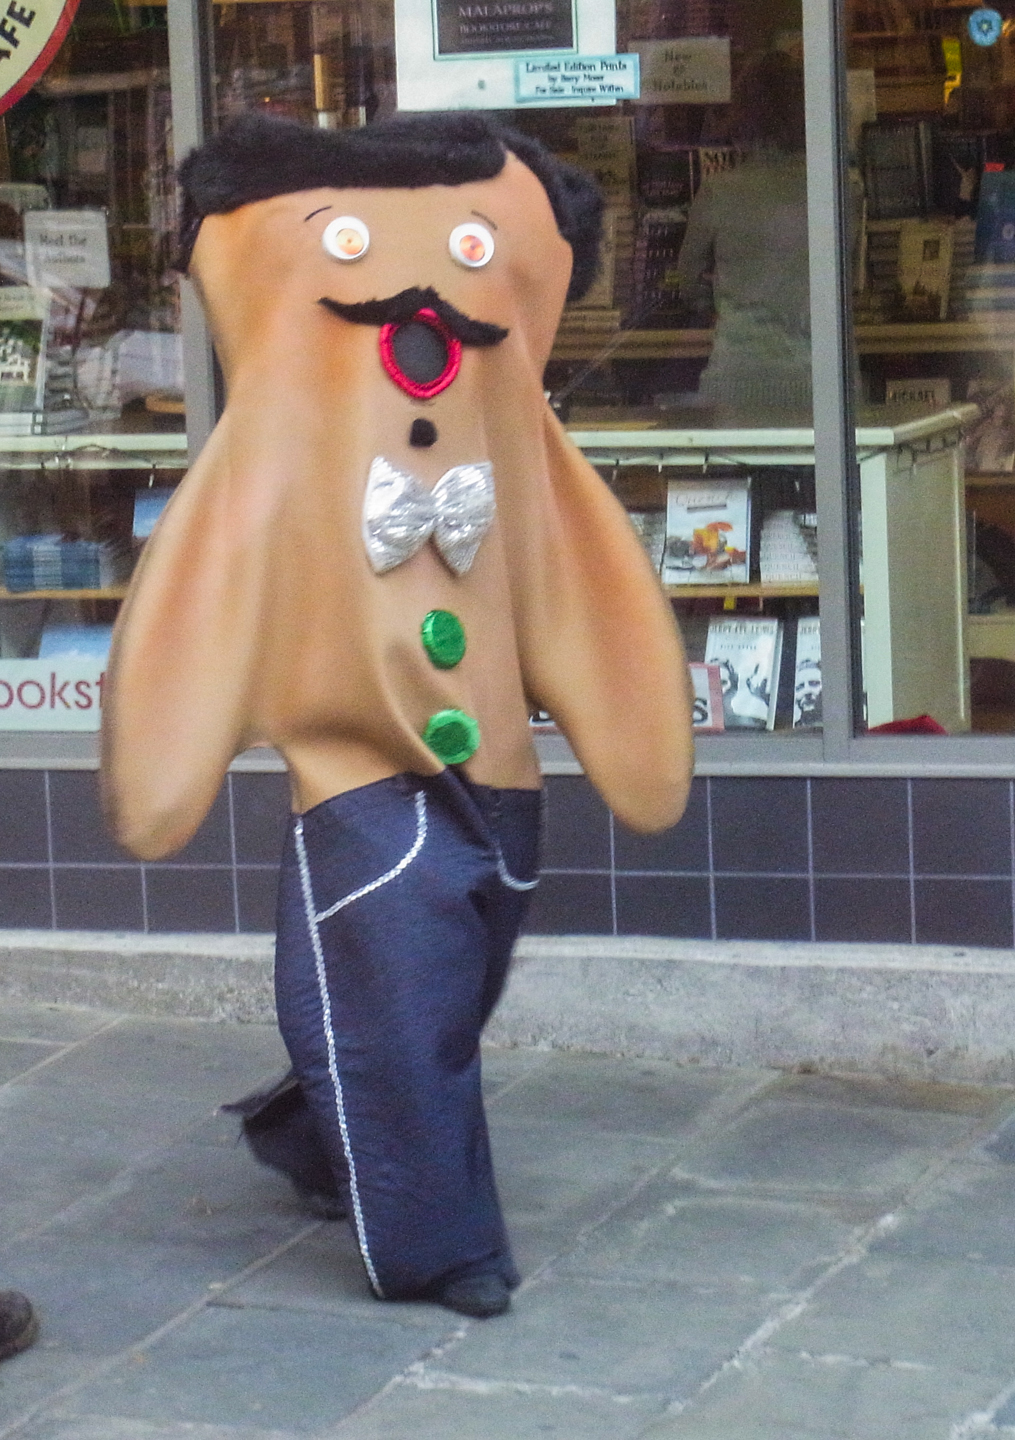 The Gingerbread Man... run, run... as fast as you can